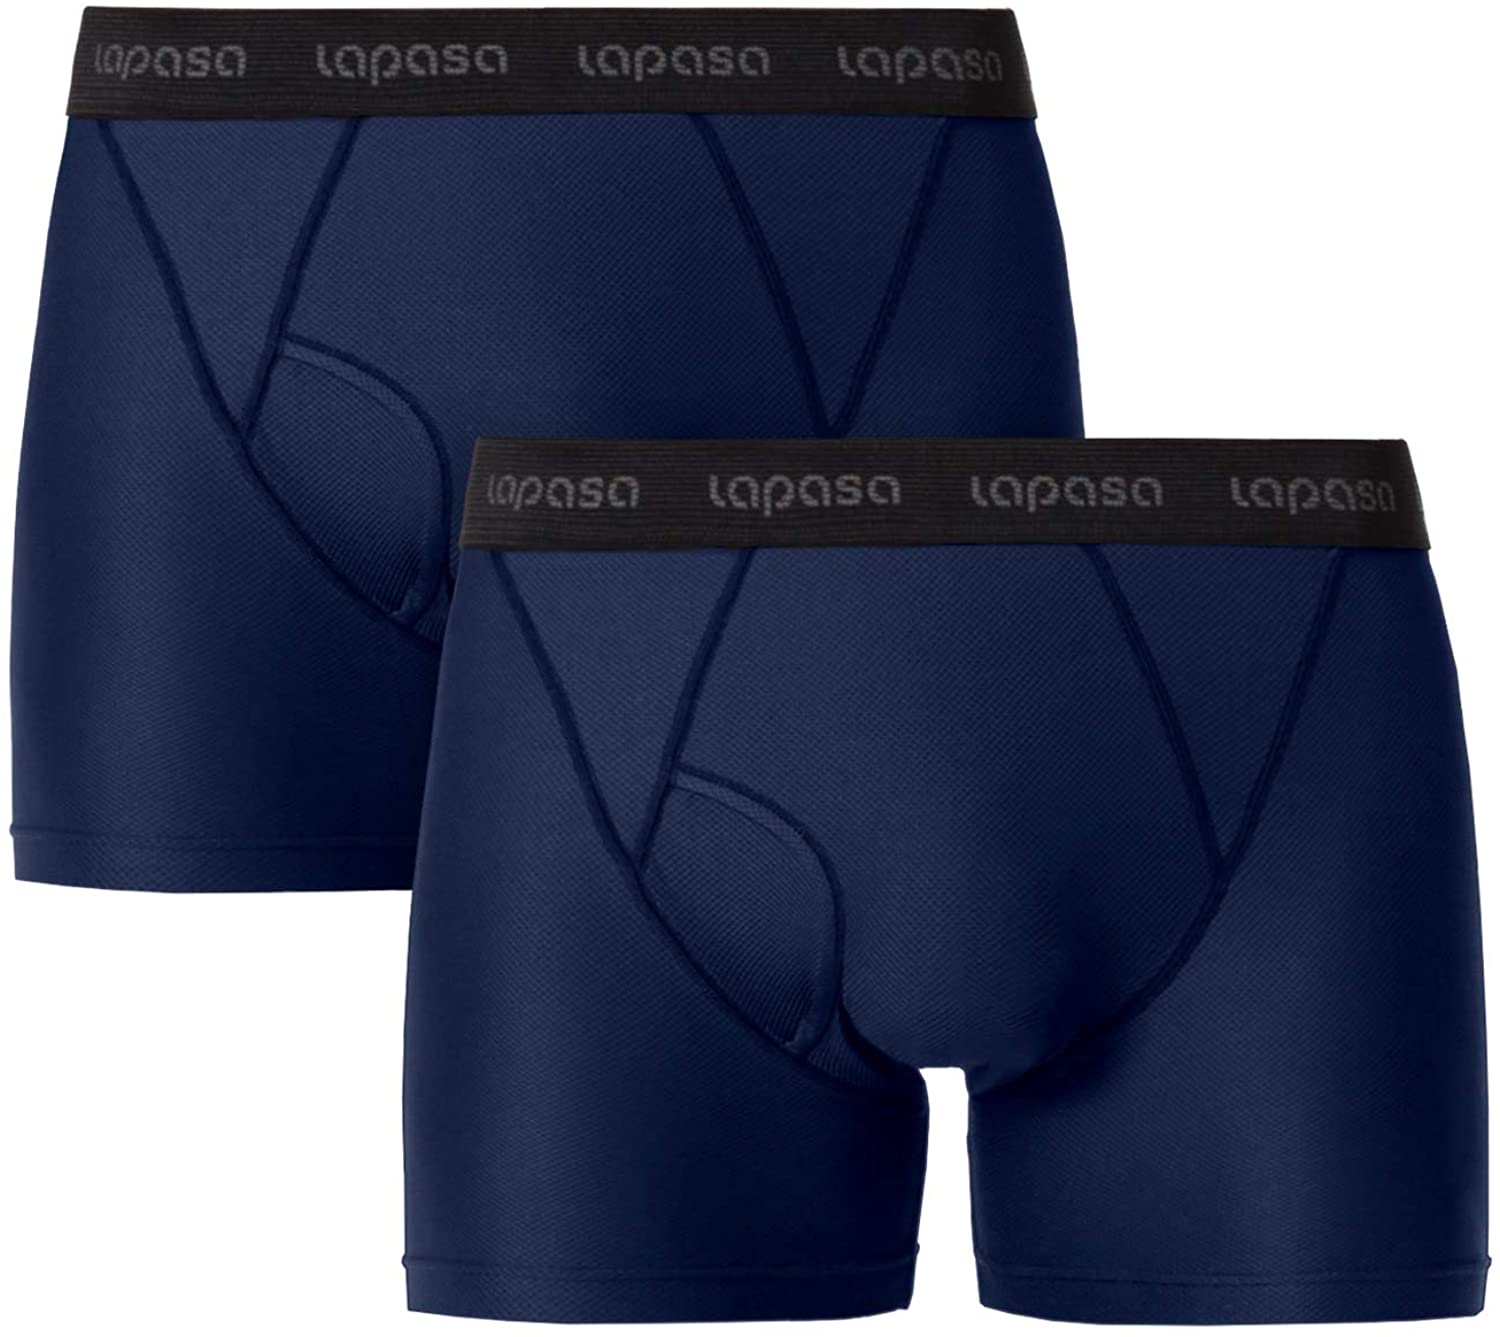 LAPASA Men's 2 Pack Quick Dry Travel Underwear Breathable Mesh Boxer Briefs  for